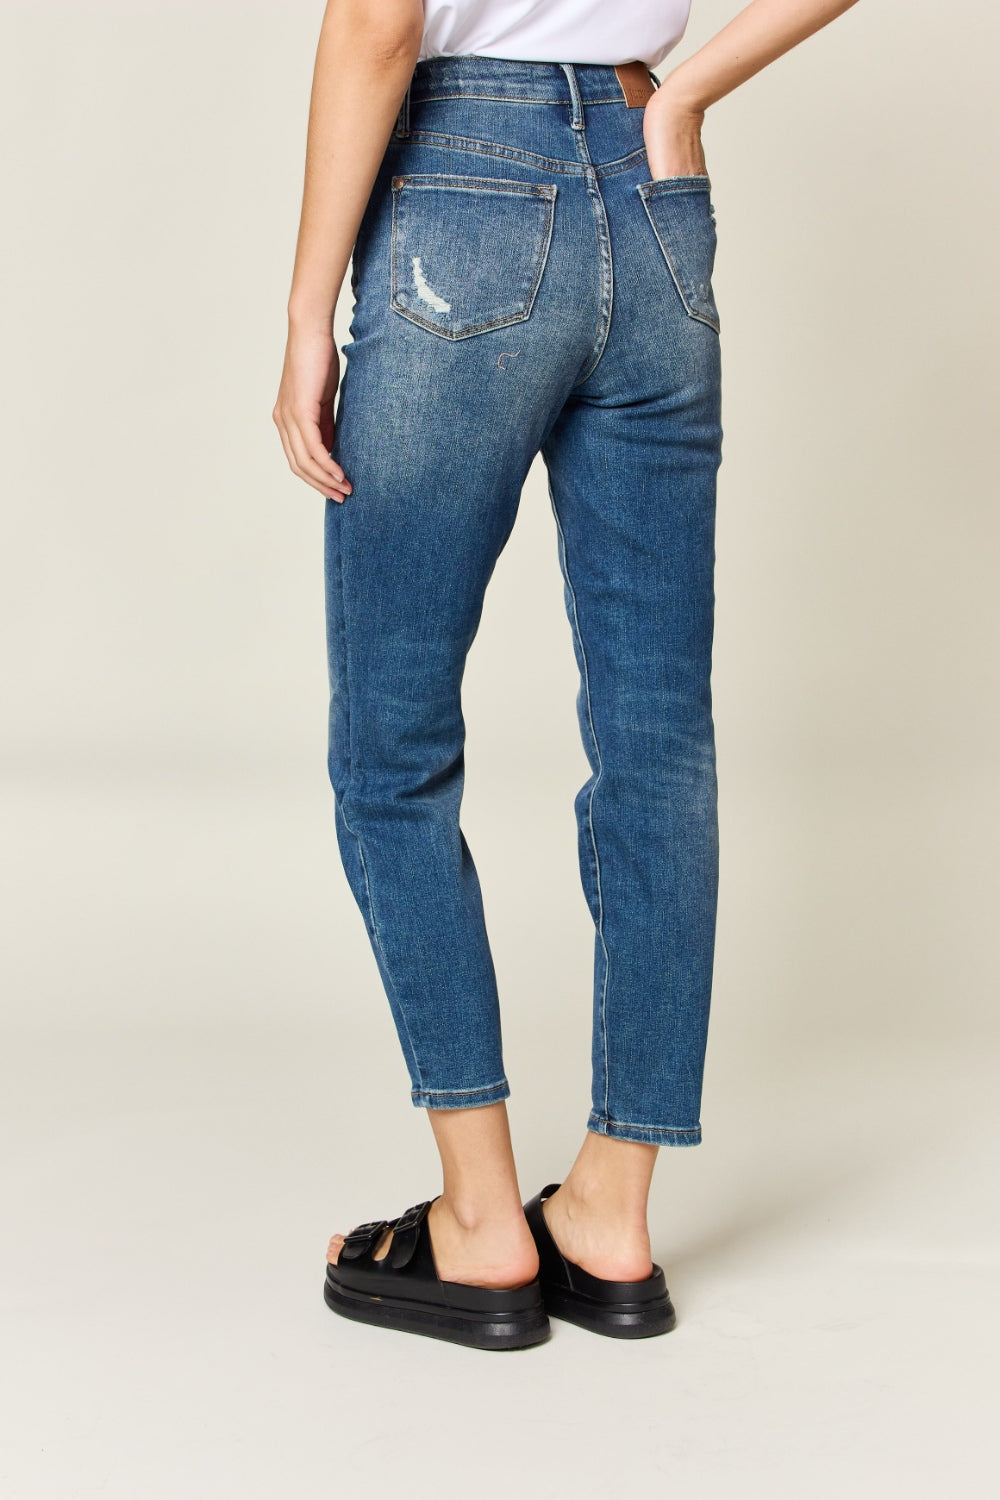 Judy Blue Full Size Tummy Control High Waist Slim Jeans Image 2